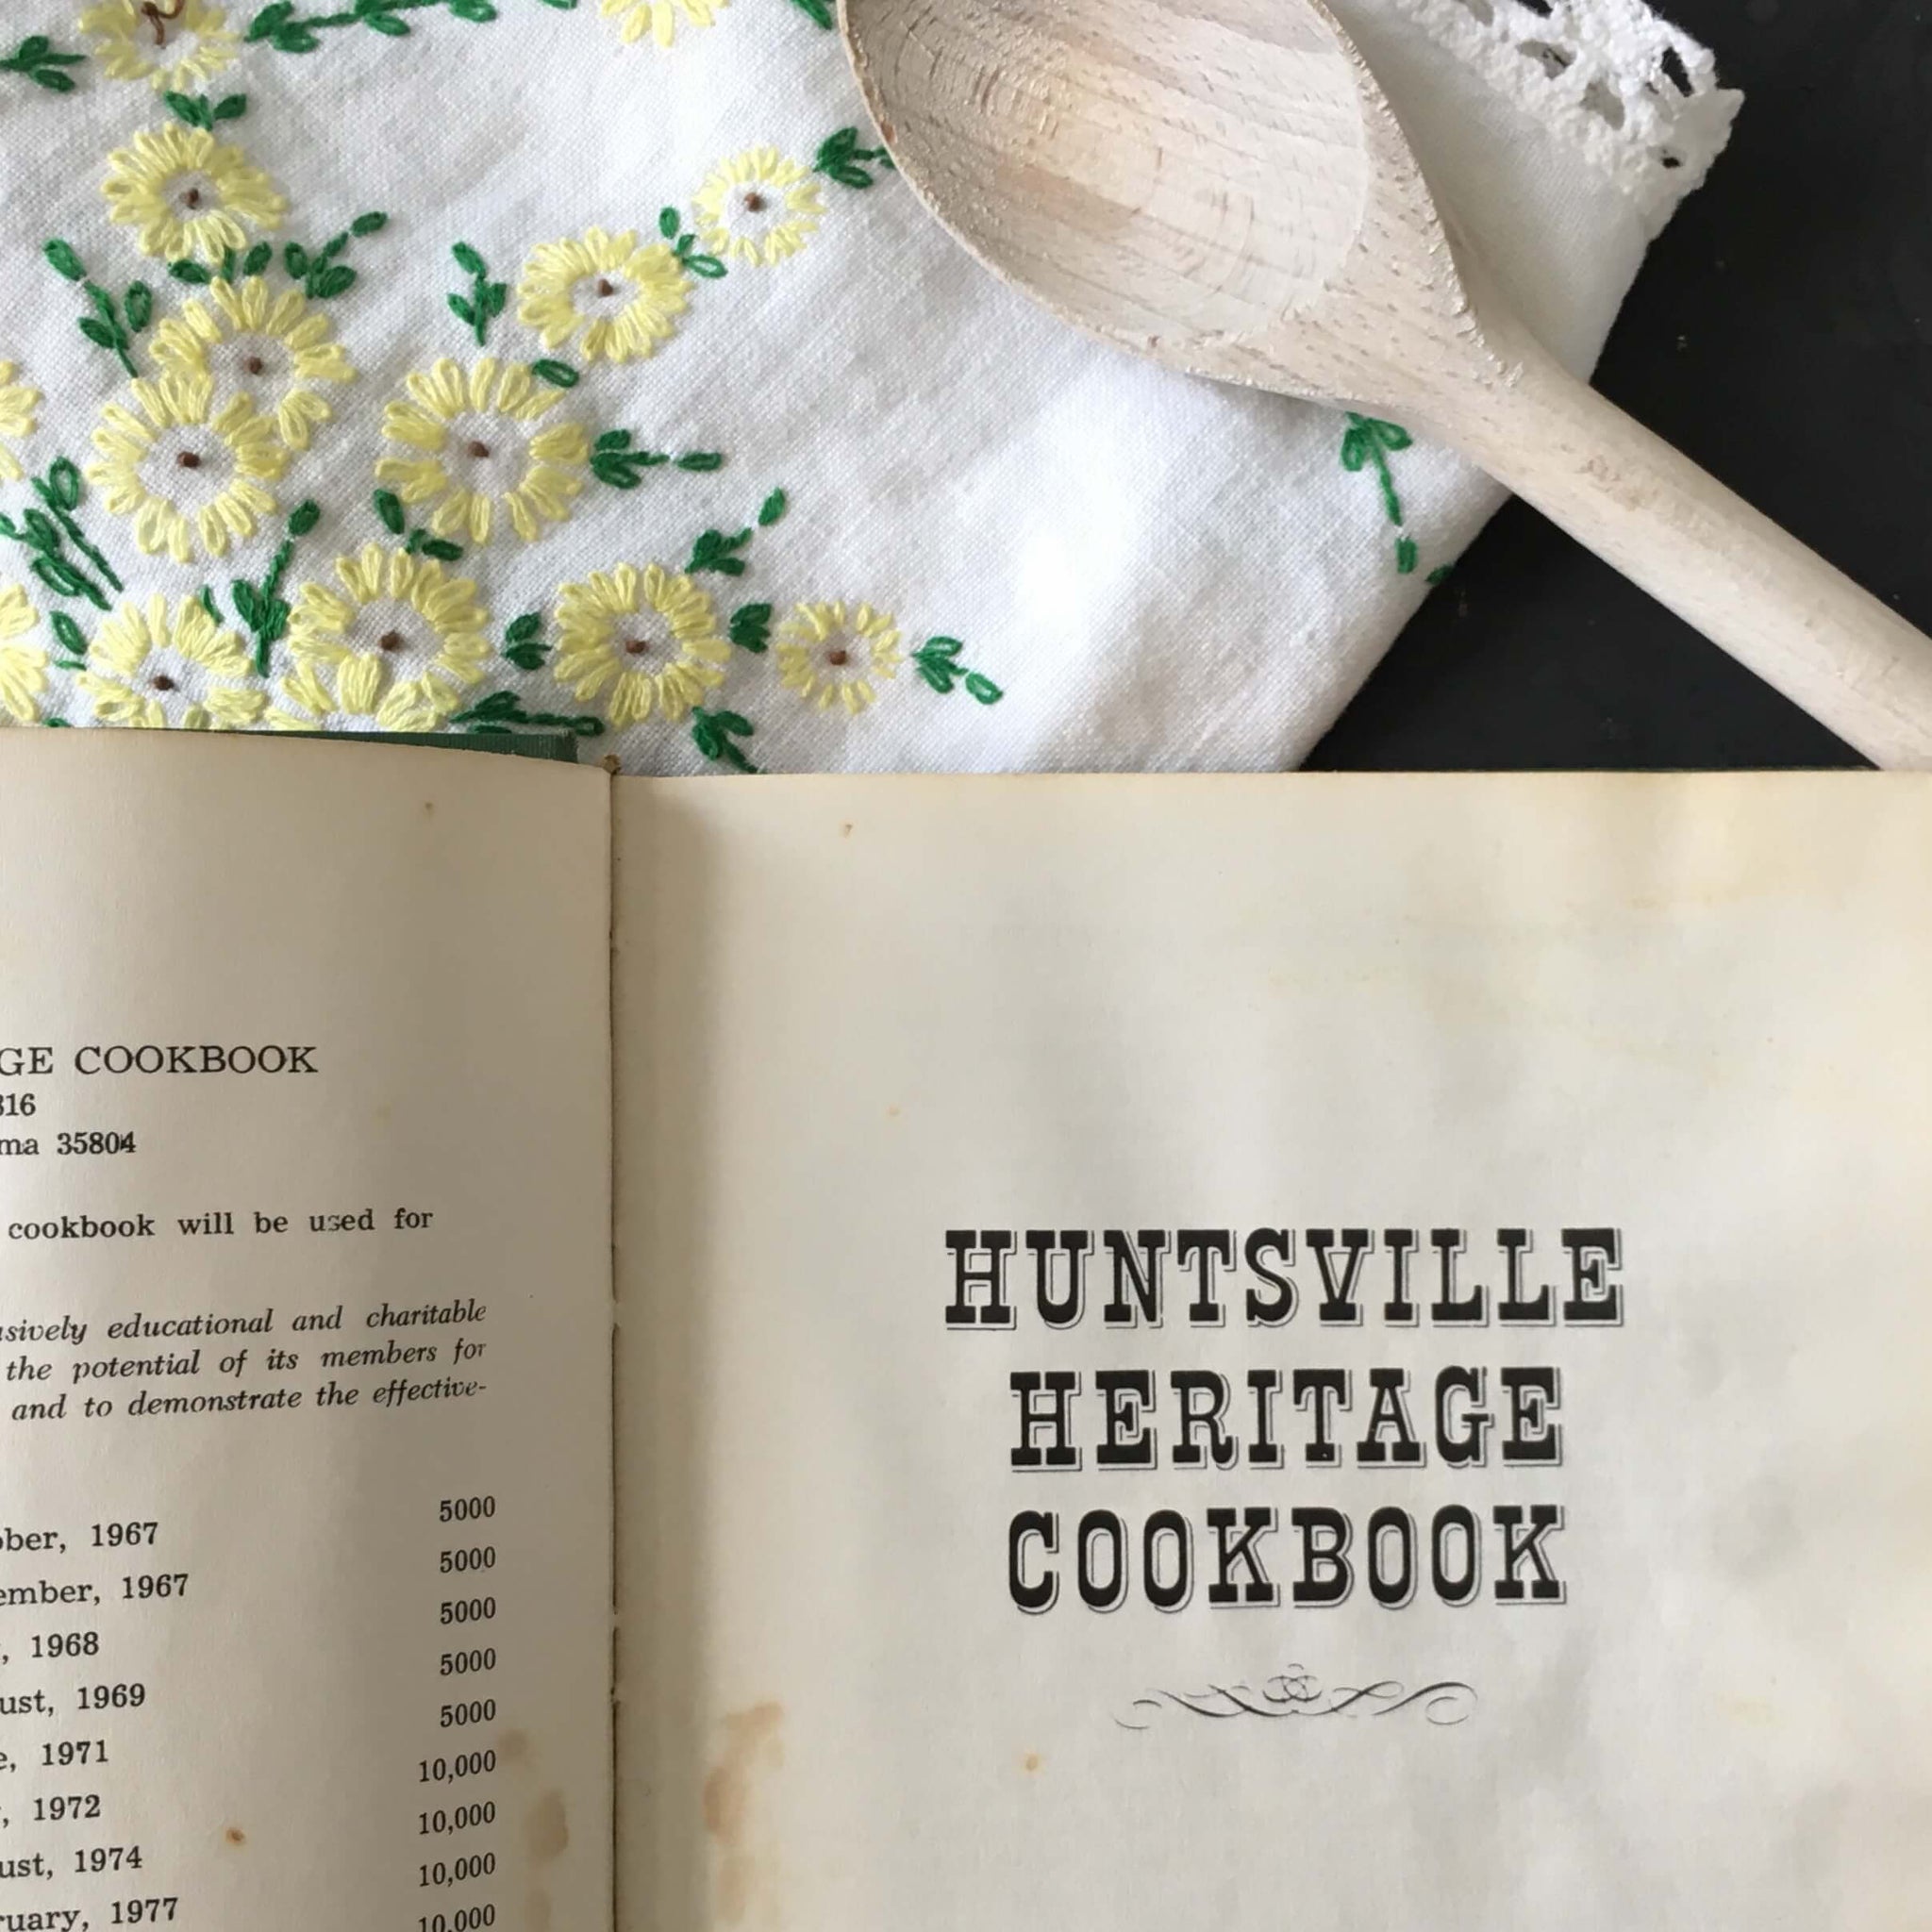 Hunstville Heritage Cookbook - 1981 Edition, 10th Printing - Junior League of Hunstville Alabama